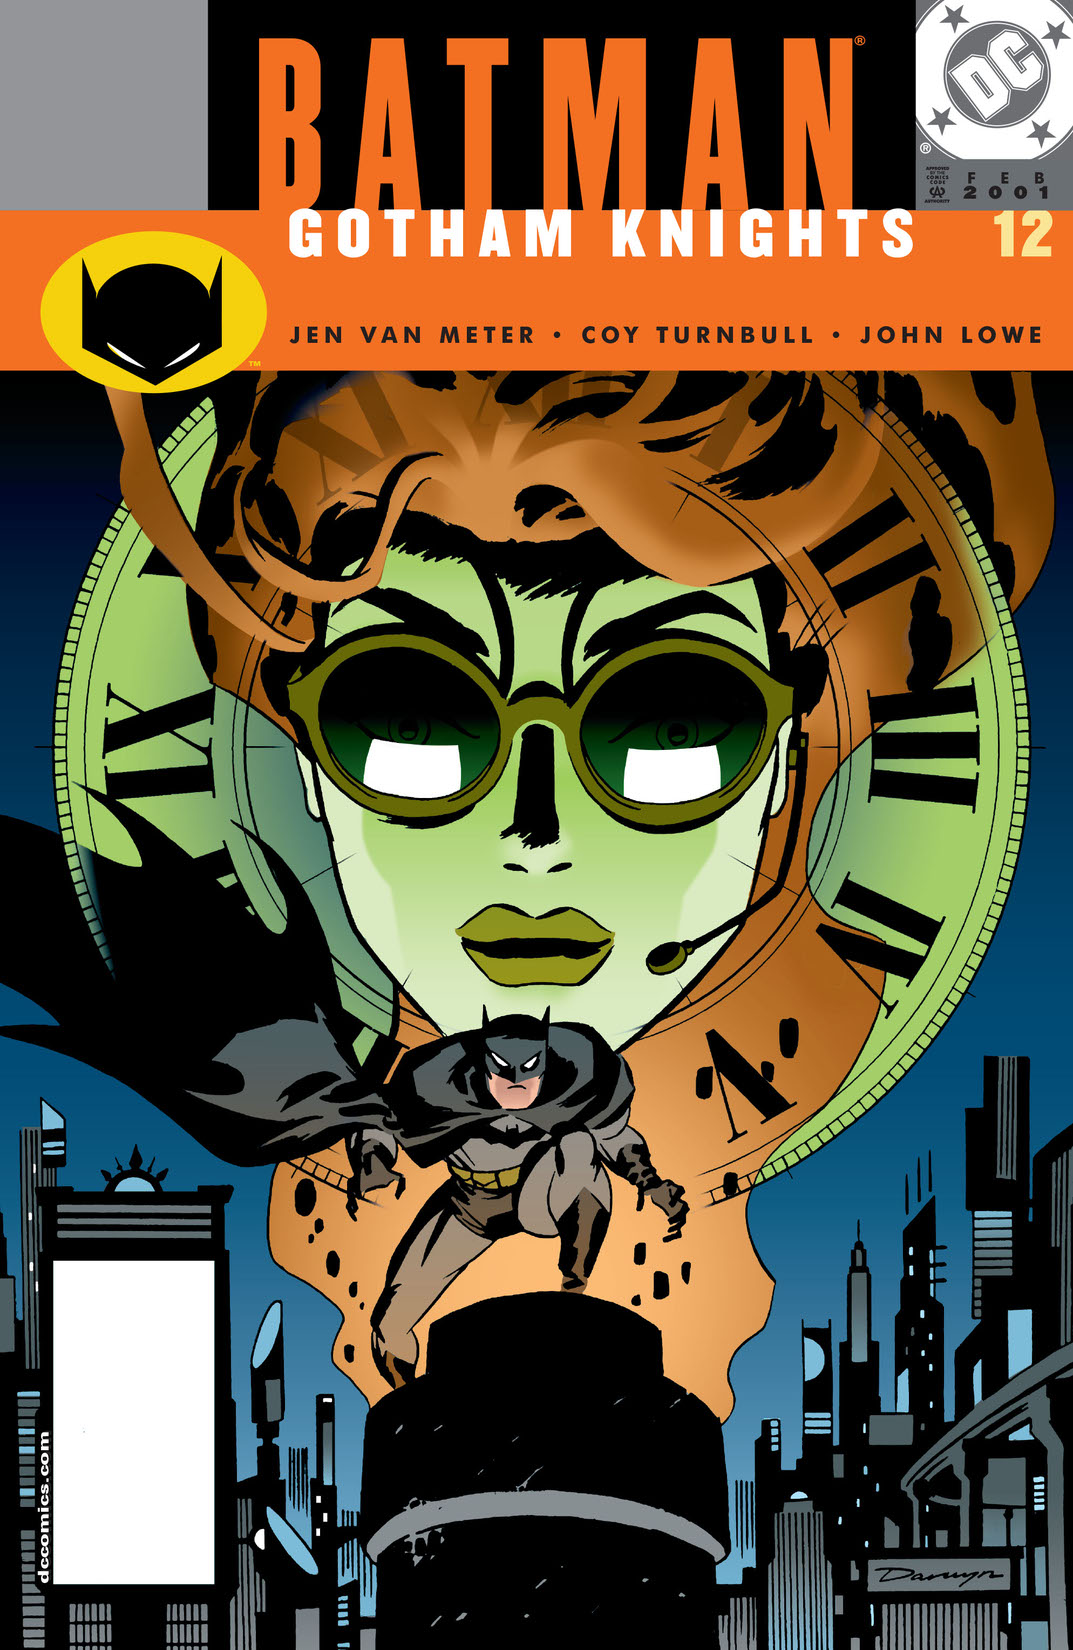 Batman: Gotham Knights #12 preview images